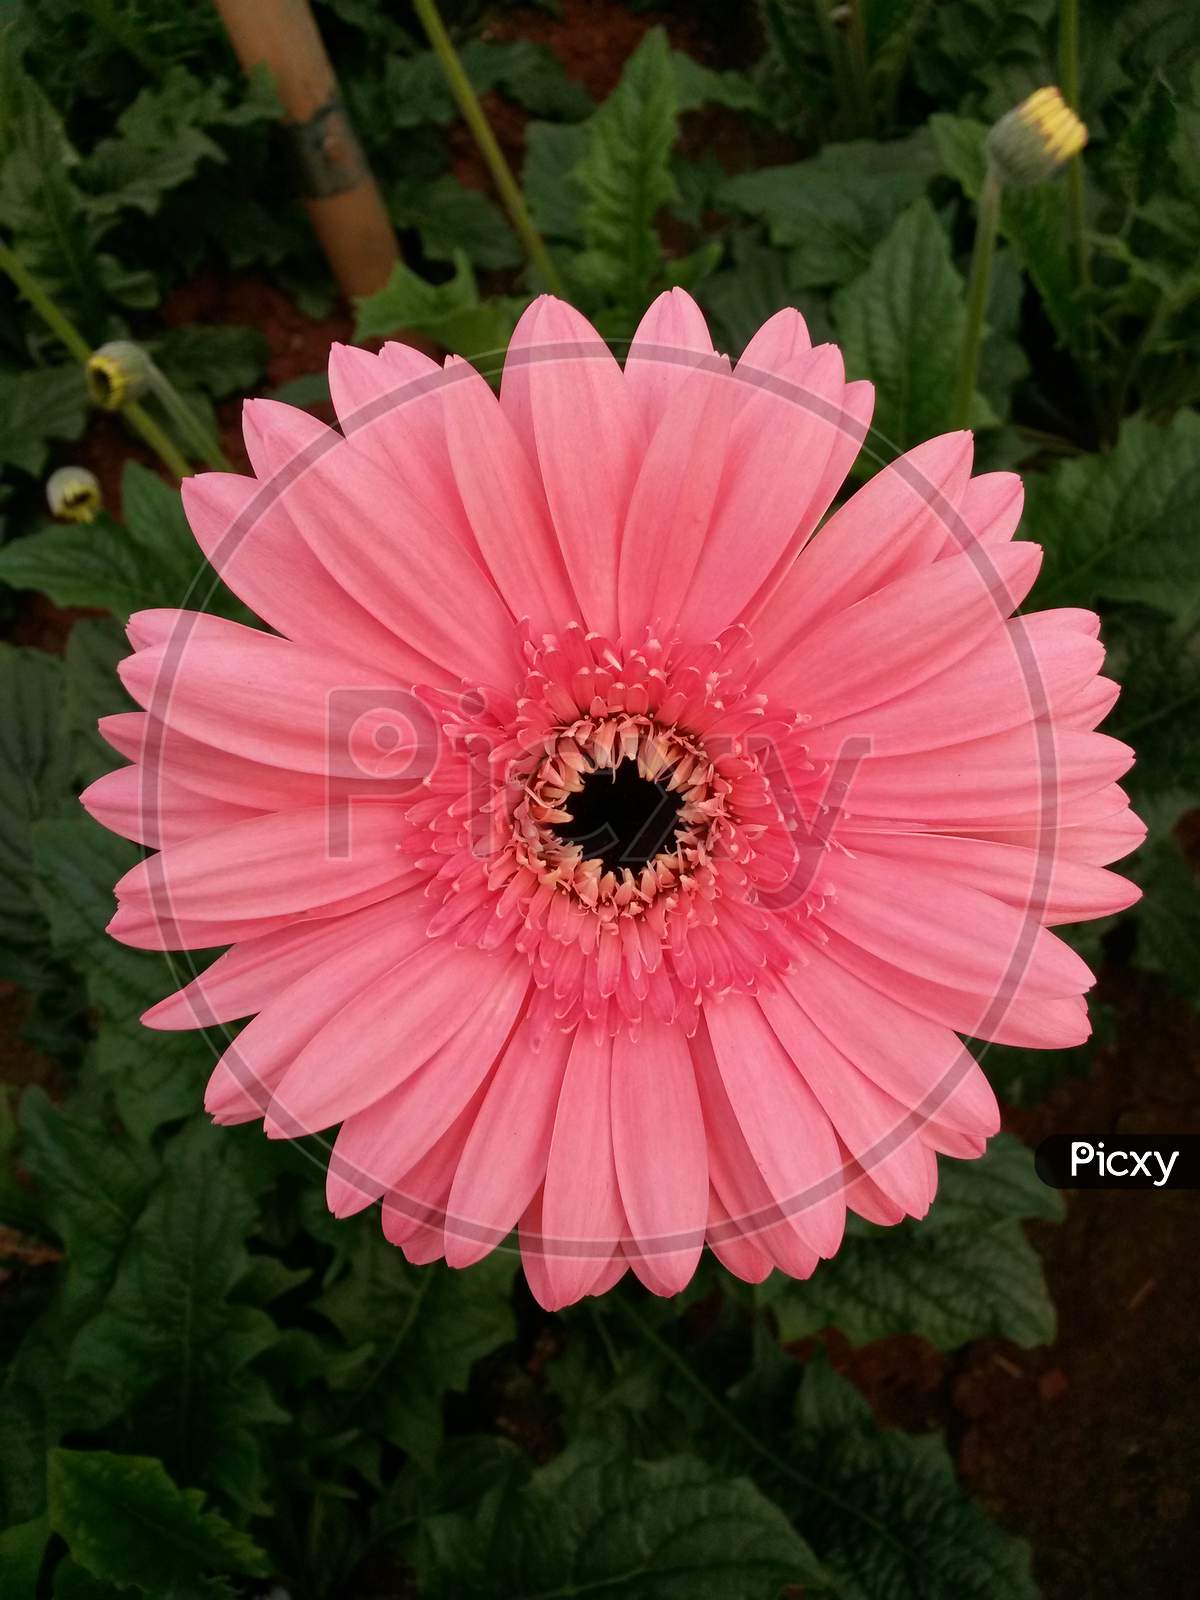 Pink Gerbera Flower With Black Center Core